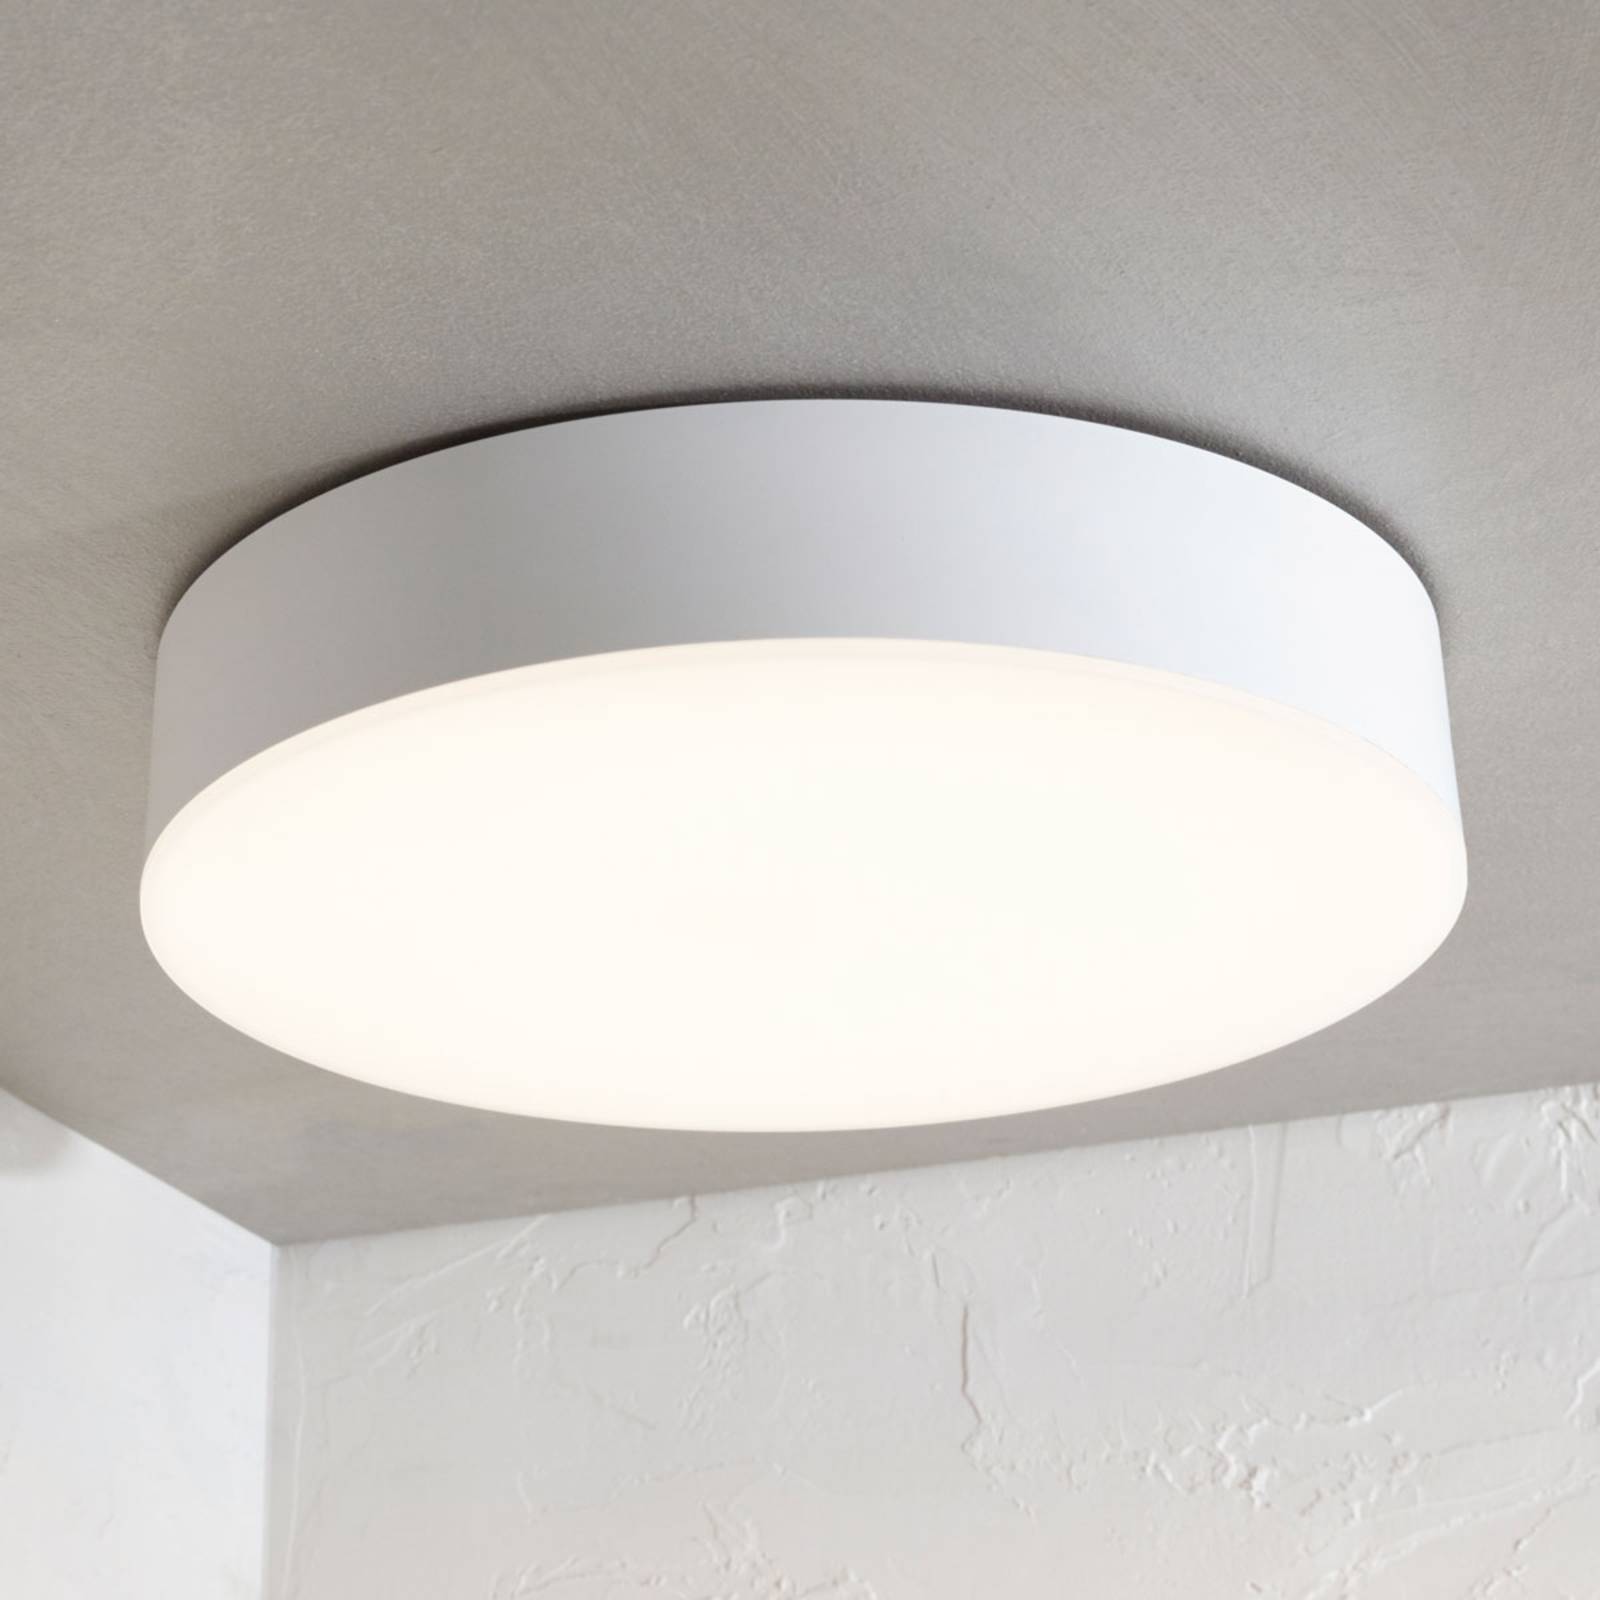 Lampa sufitowa LED Lahja, IP65, biała